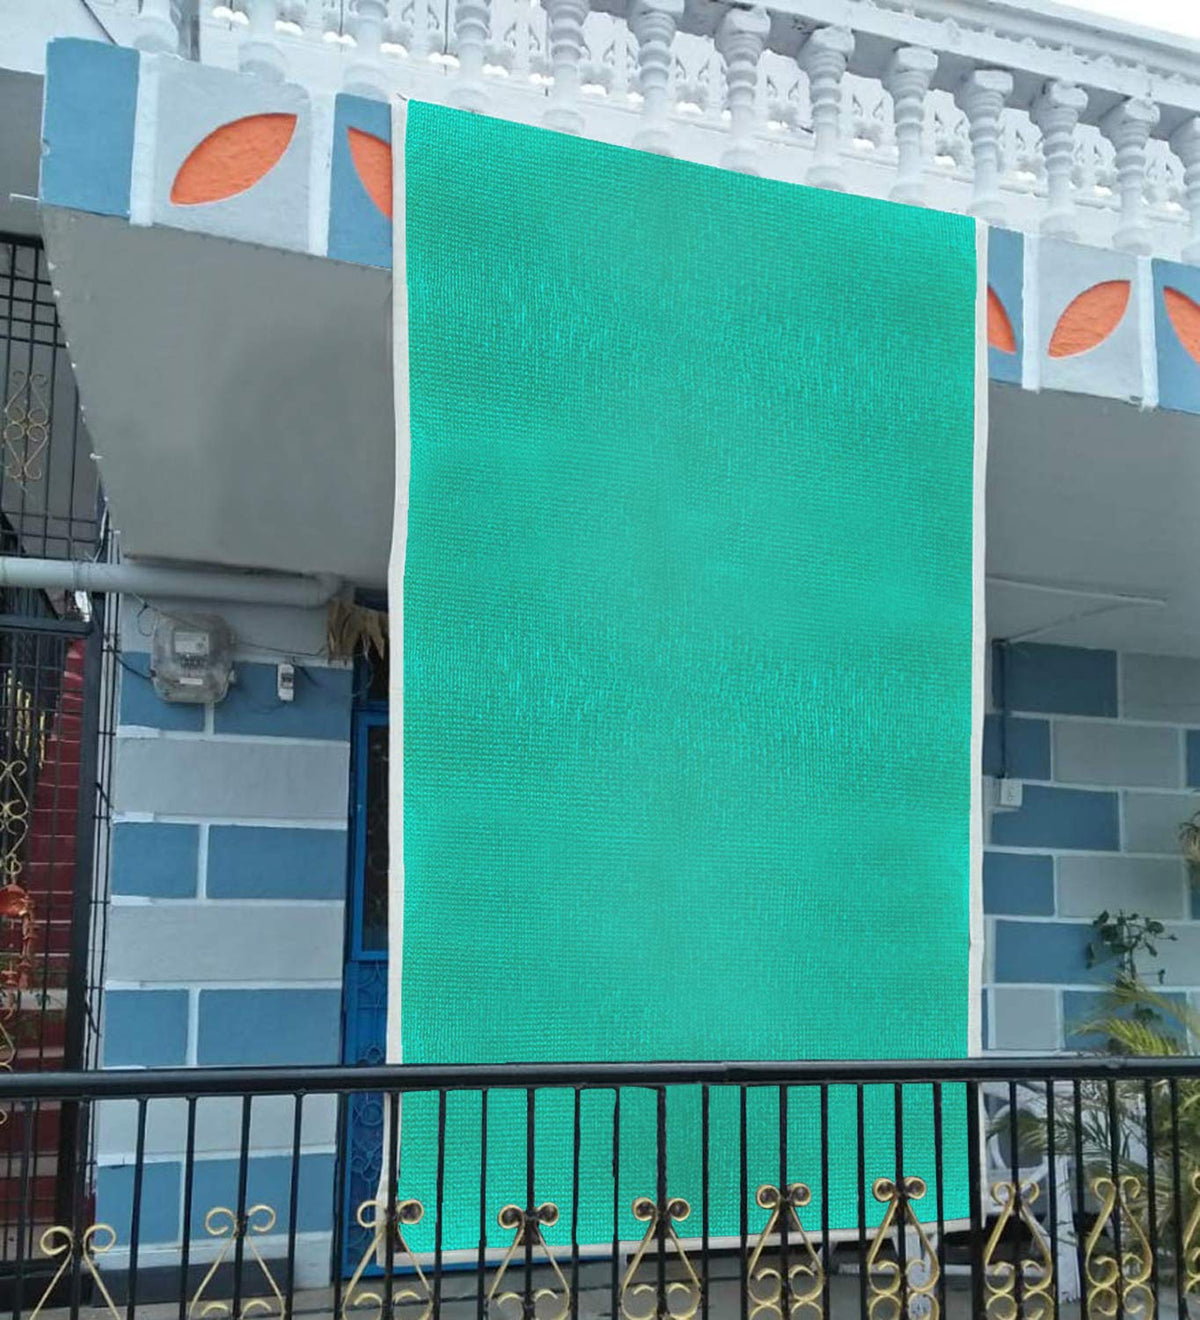 Heart Home 10 x 6 ft. Sun Mesh Shade Sunblock Shade Cloth UV Resistant Net for Garden/Home/Lawn/Shade/Netting/Sports (Green), Standard (F_26_HEARTH016982)